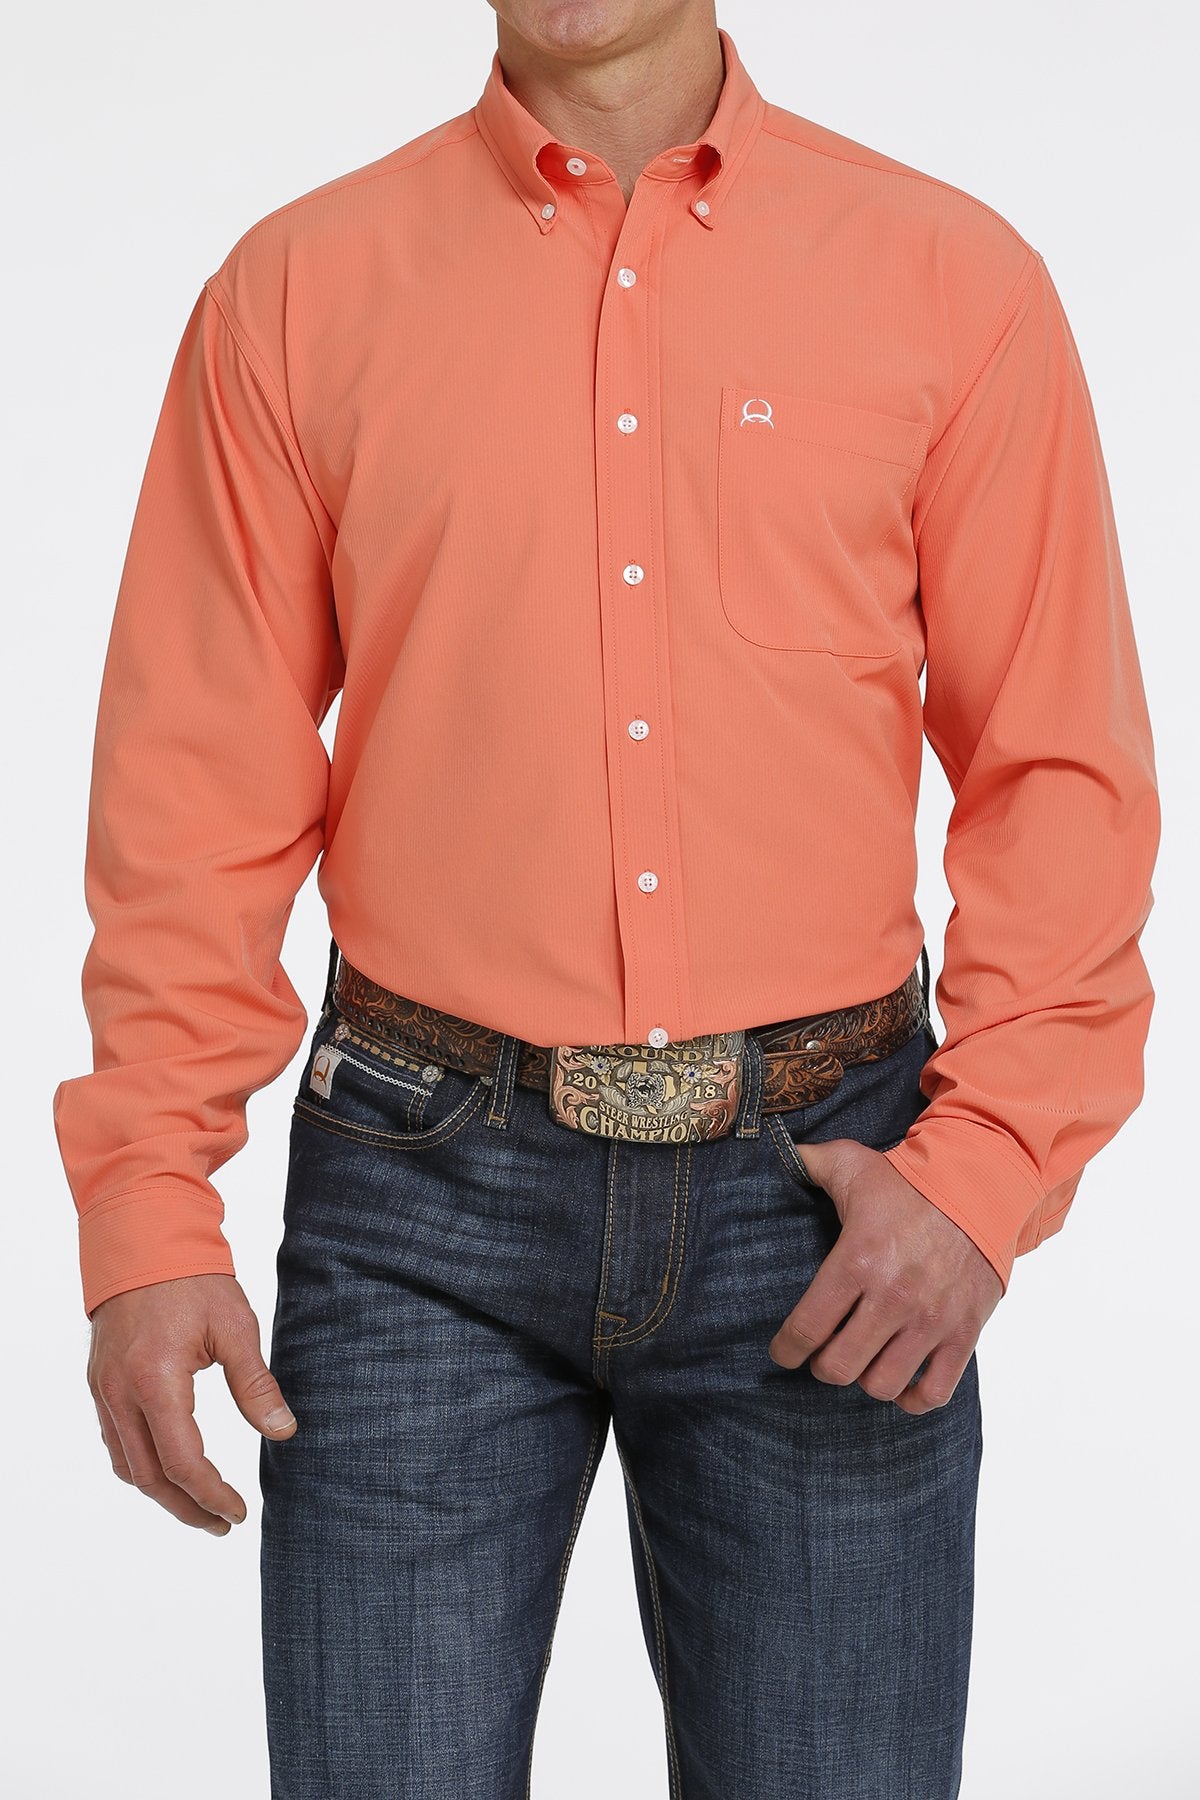 Cinch Mens ArenaFlex Long Sleeve Button-Down Shirt - Coral MTW1862015